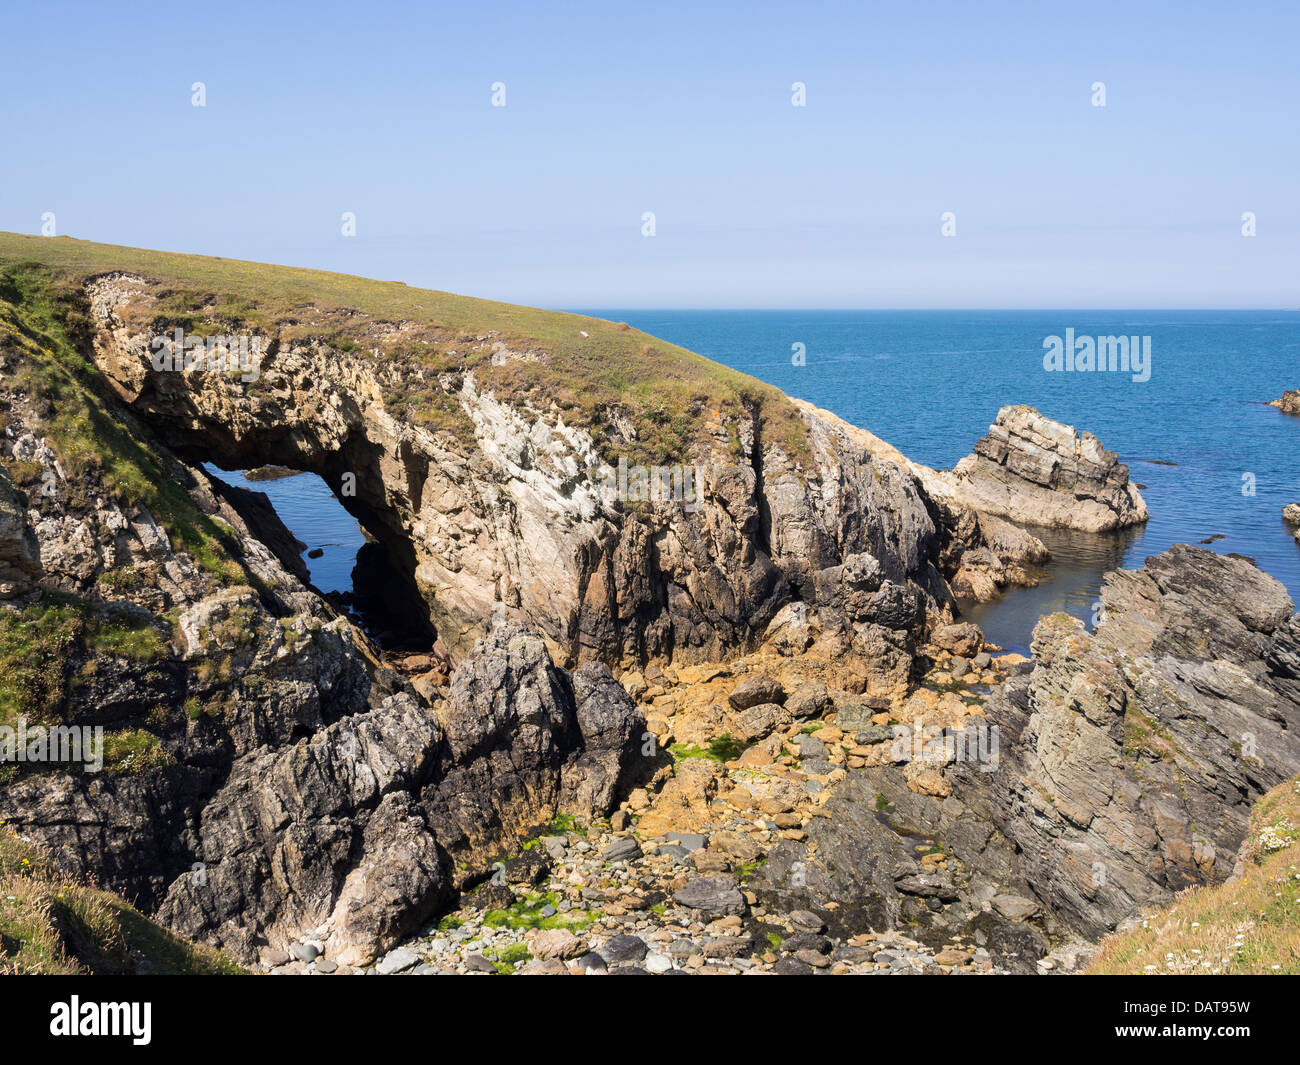 BWA Du Black Arch natürliche Felsformation auf der Isle of Anglesey Coastal Path auf Seacliffs Rhoscolyn heilige Insel Anglesey Wales UK Stockfoto